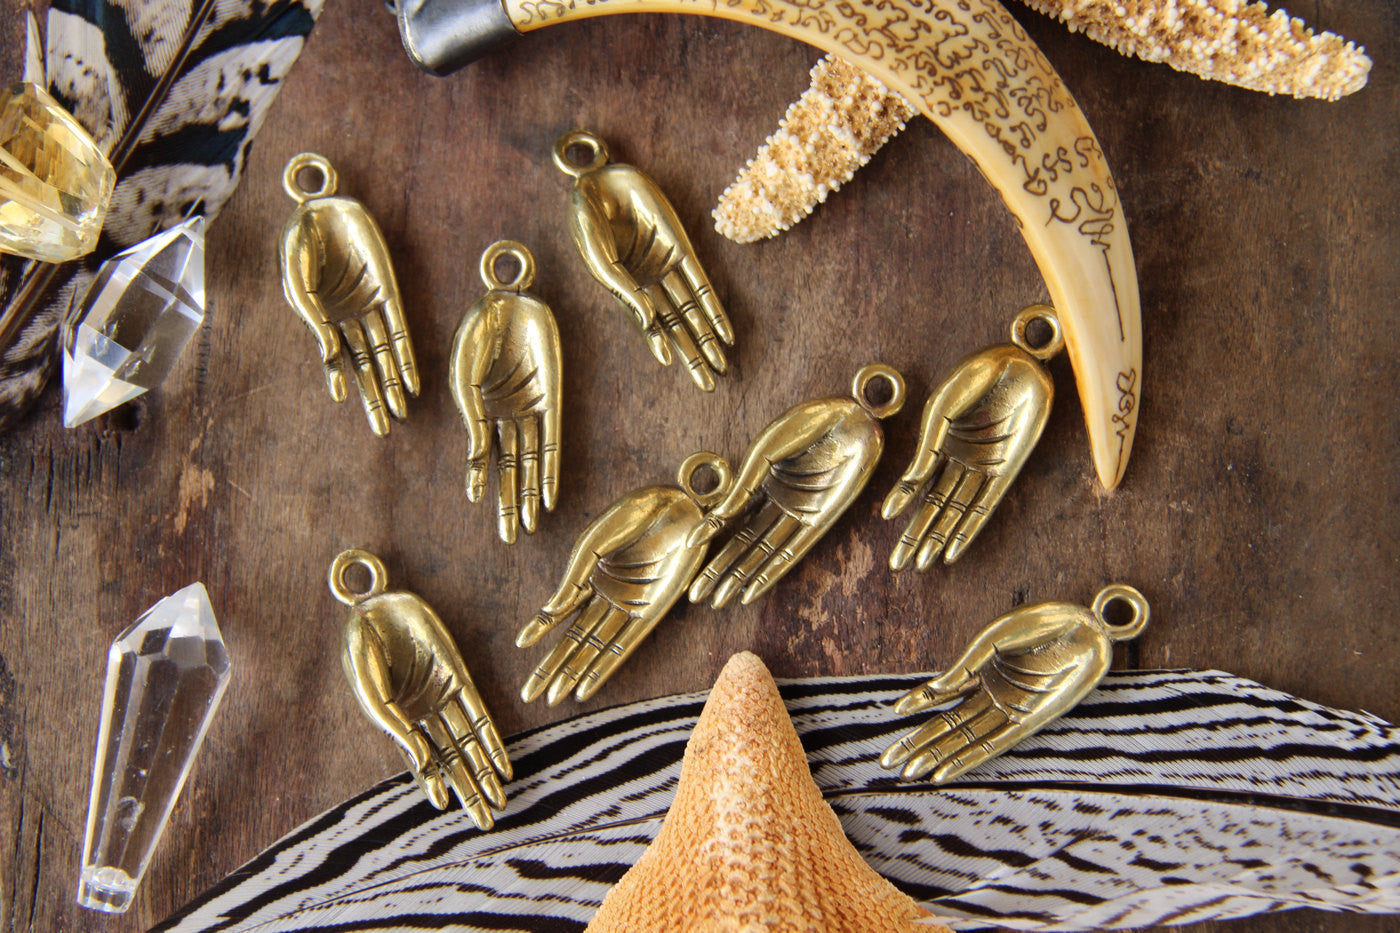 Gyan Mudra Golden Brass Pendant, 1 Himalayan Hand Gesture Pendant, Buddhist, Yoga, Meditation, Spiritual Jewelry Making Supplies, 1 Pendant - ShopWomanShopsWorld.com. Bone Beads, Tassels, Pom Poms, African Beads.